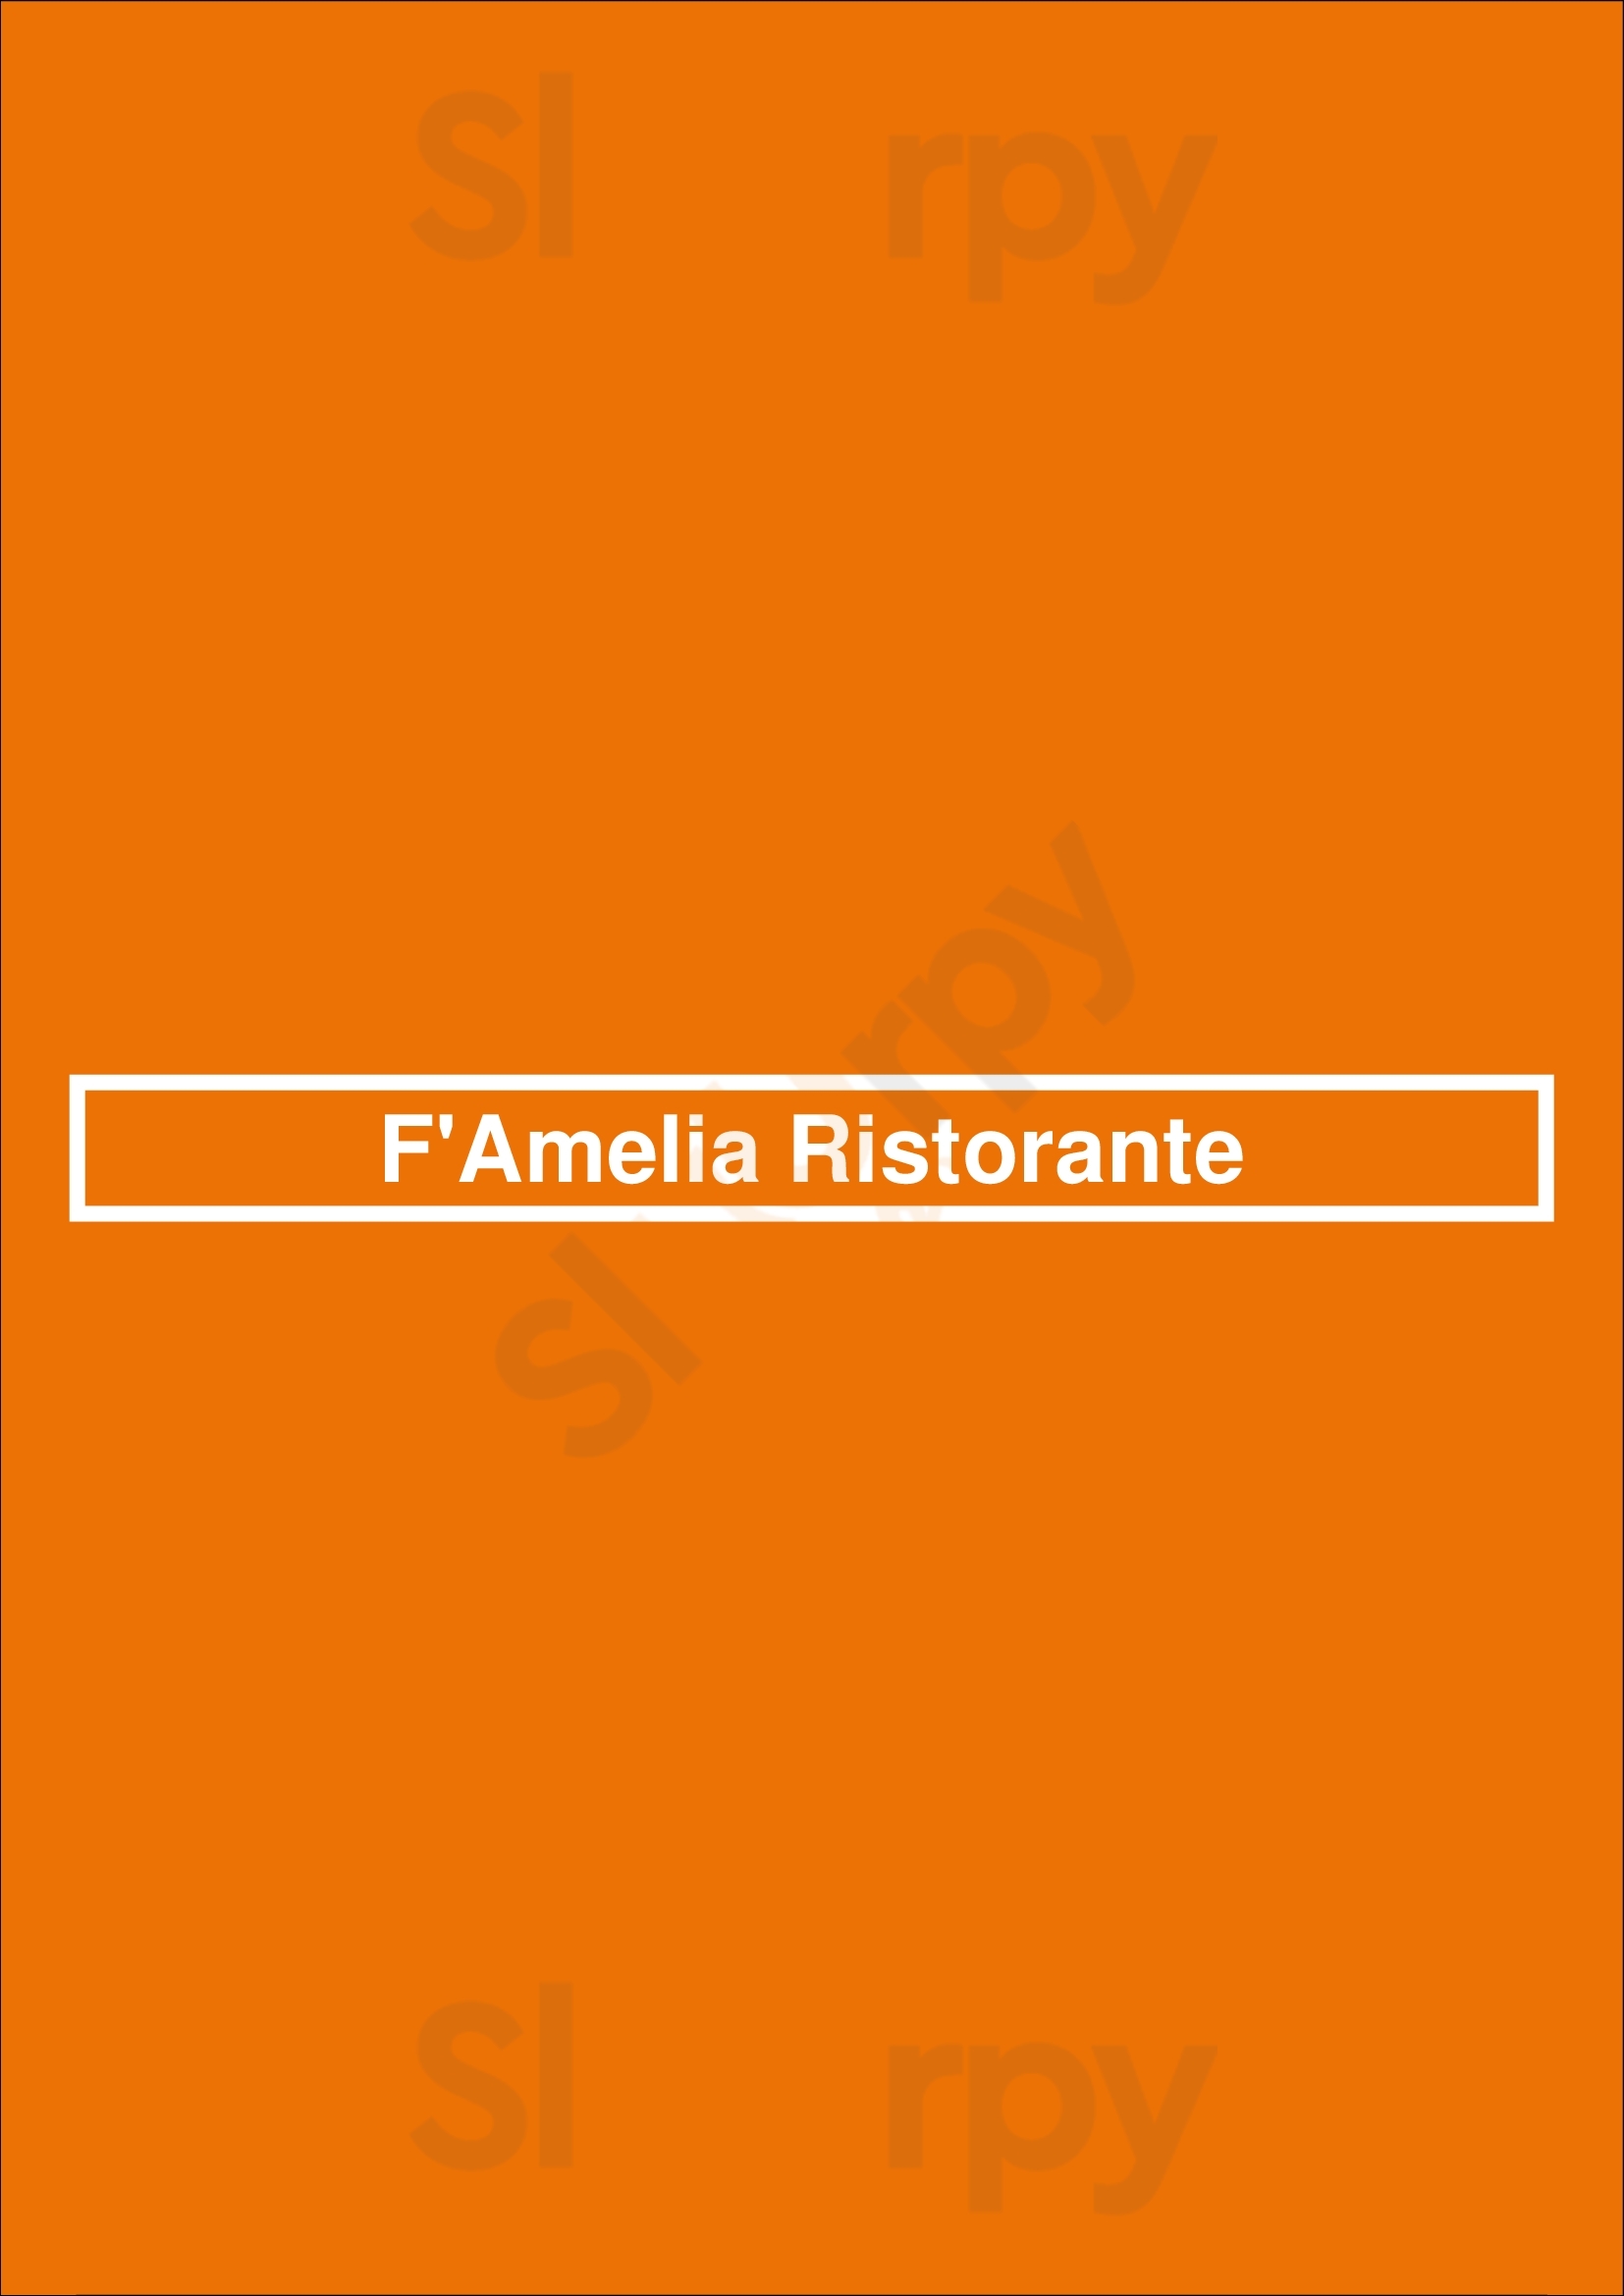 F'amelia Ristorante Toronto Menu - 1